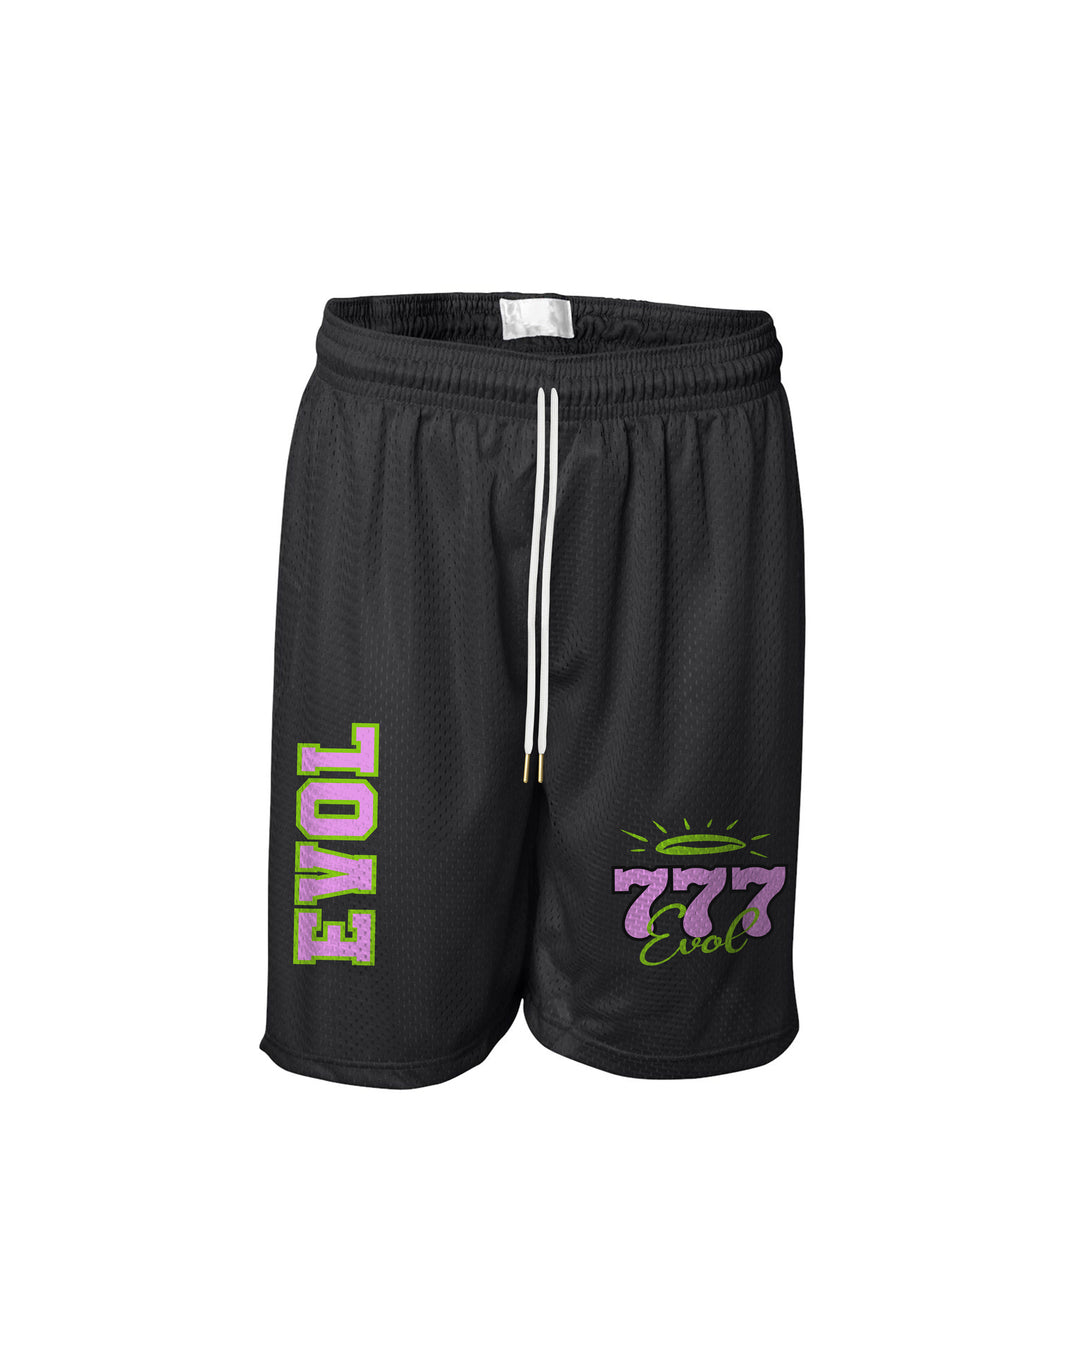 EVOL 777 Black Mesh Shorts With Purple